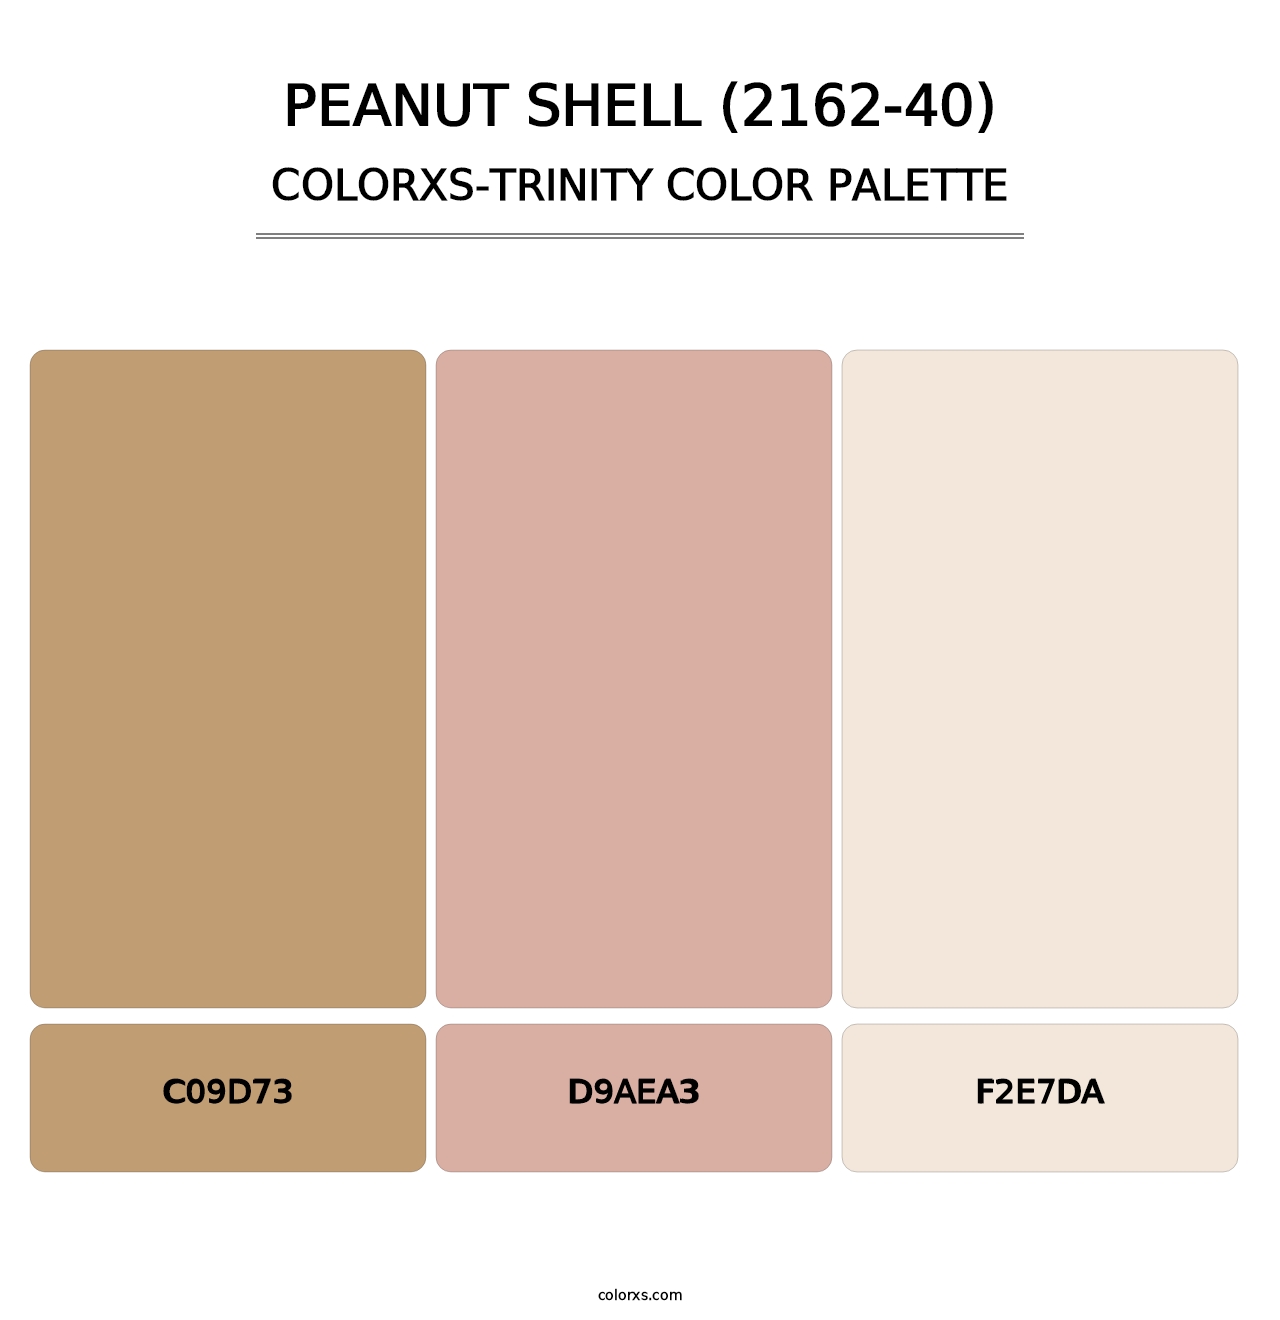 Peanut Shell (2162-40) - Colorxs Trinity Palette